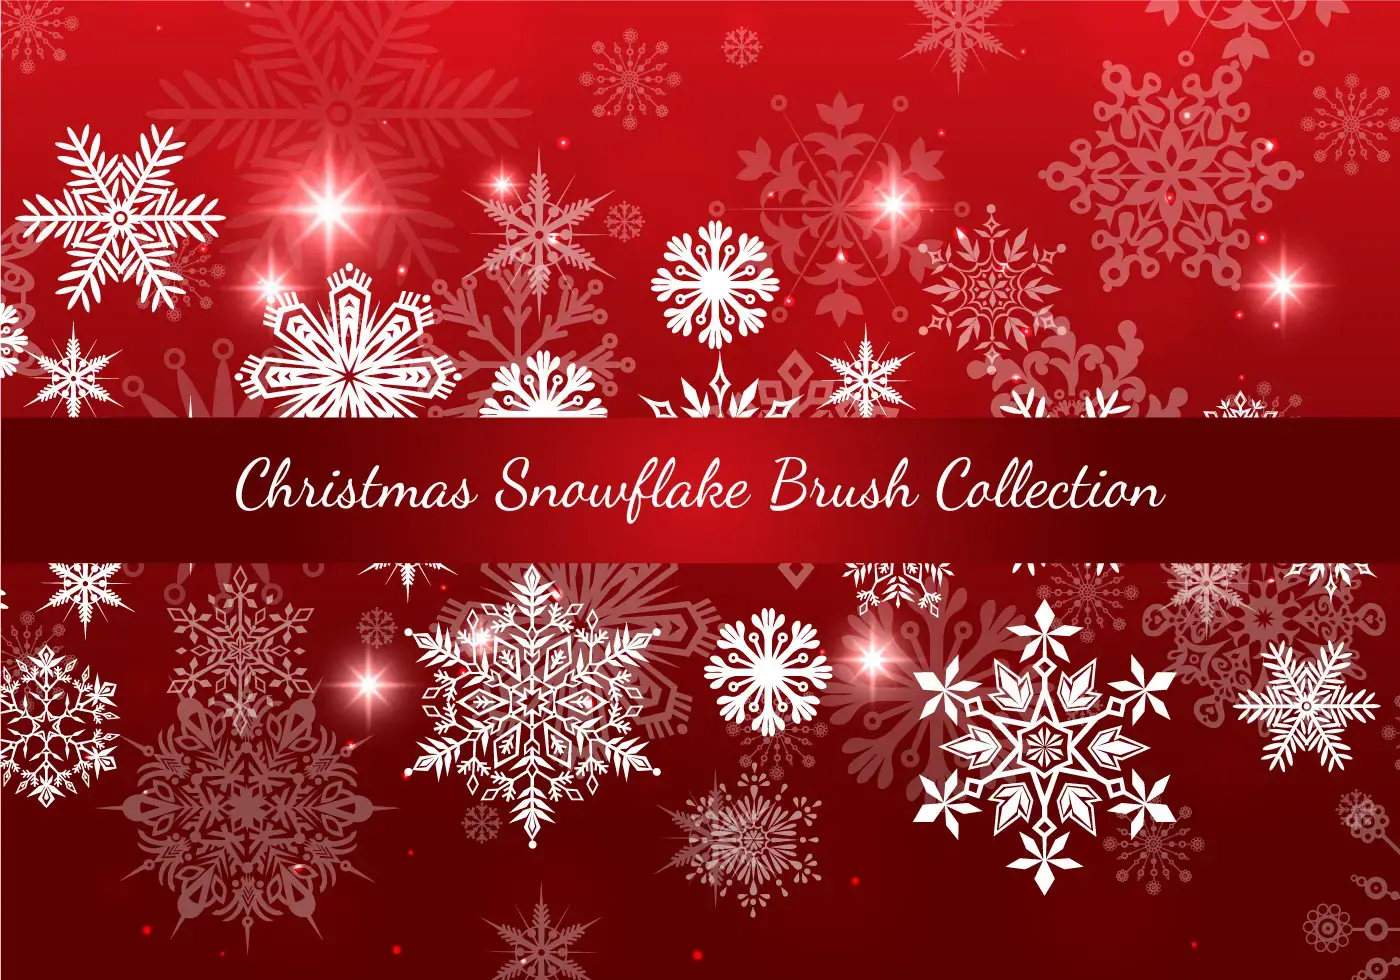 Christmas snowflake brush collection photoshop brushes